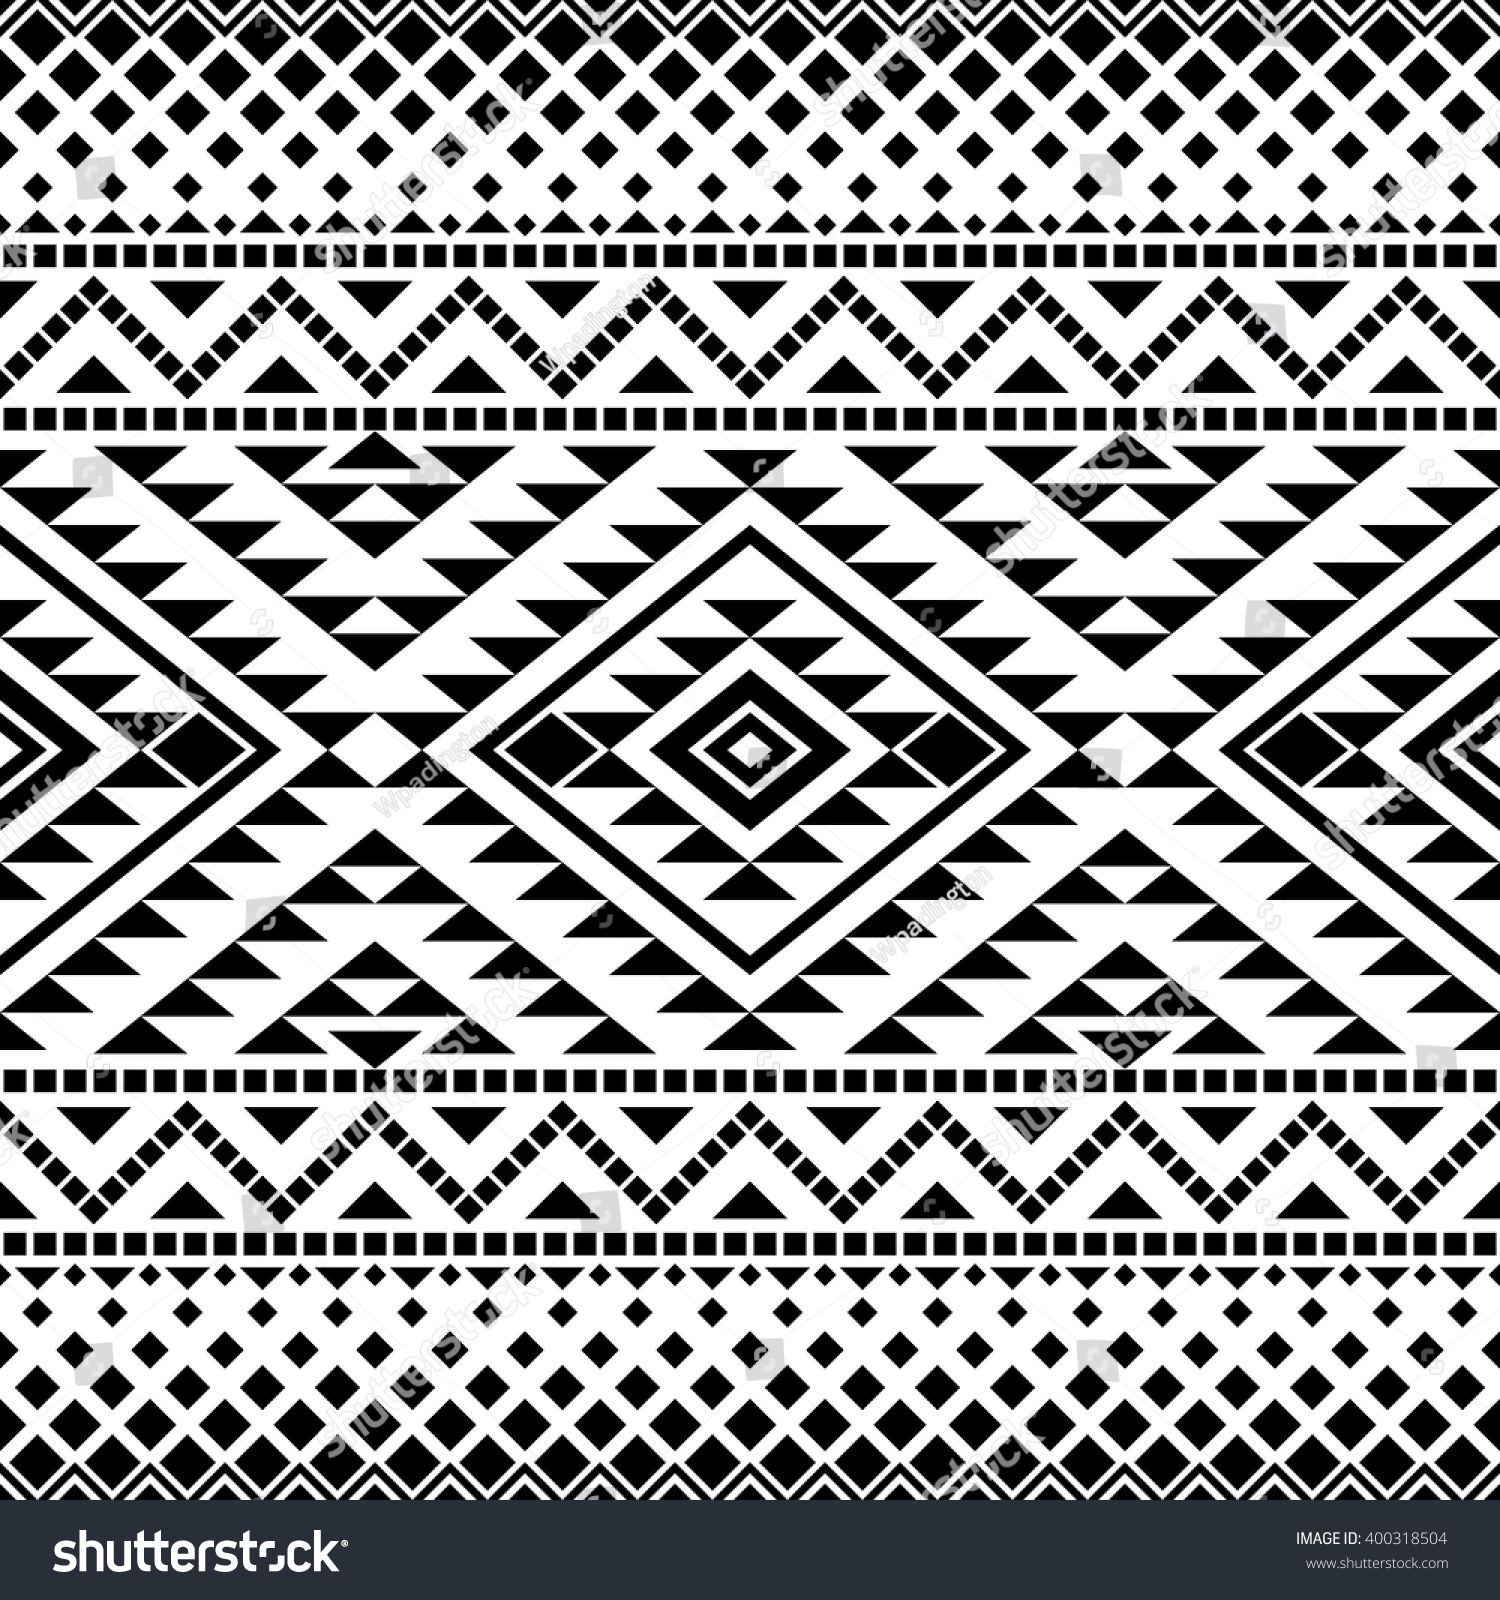 Seamless Pattern With Tribal Aztec Motives. Aztec Print. Aztec Design ...